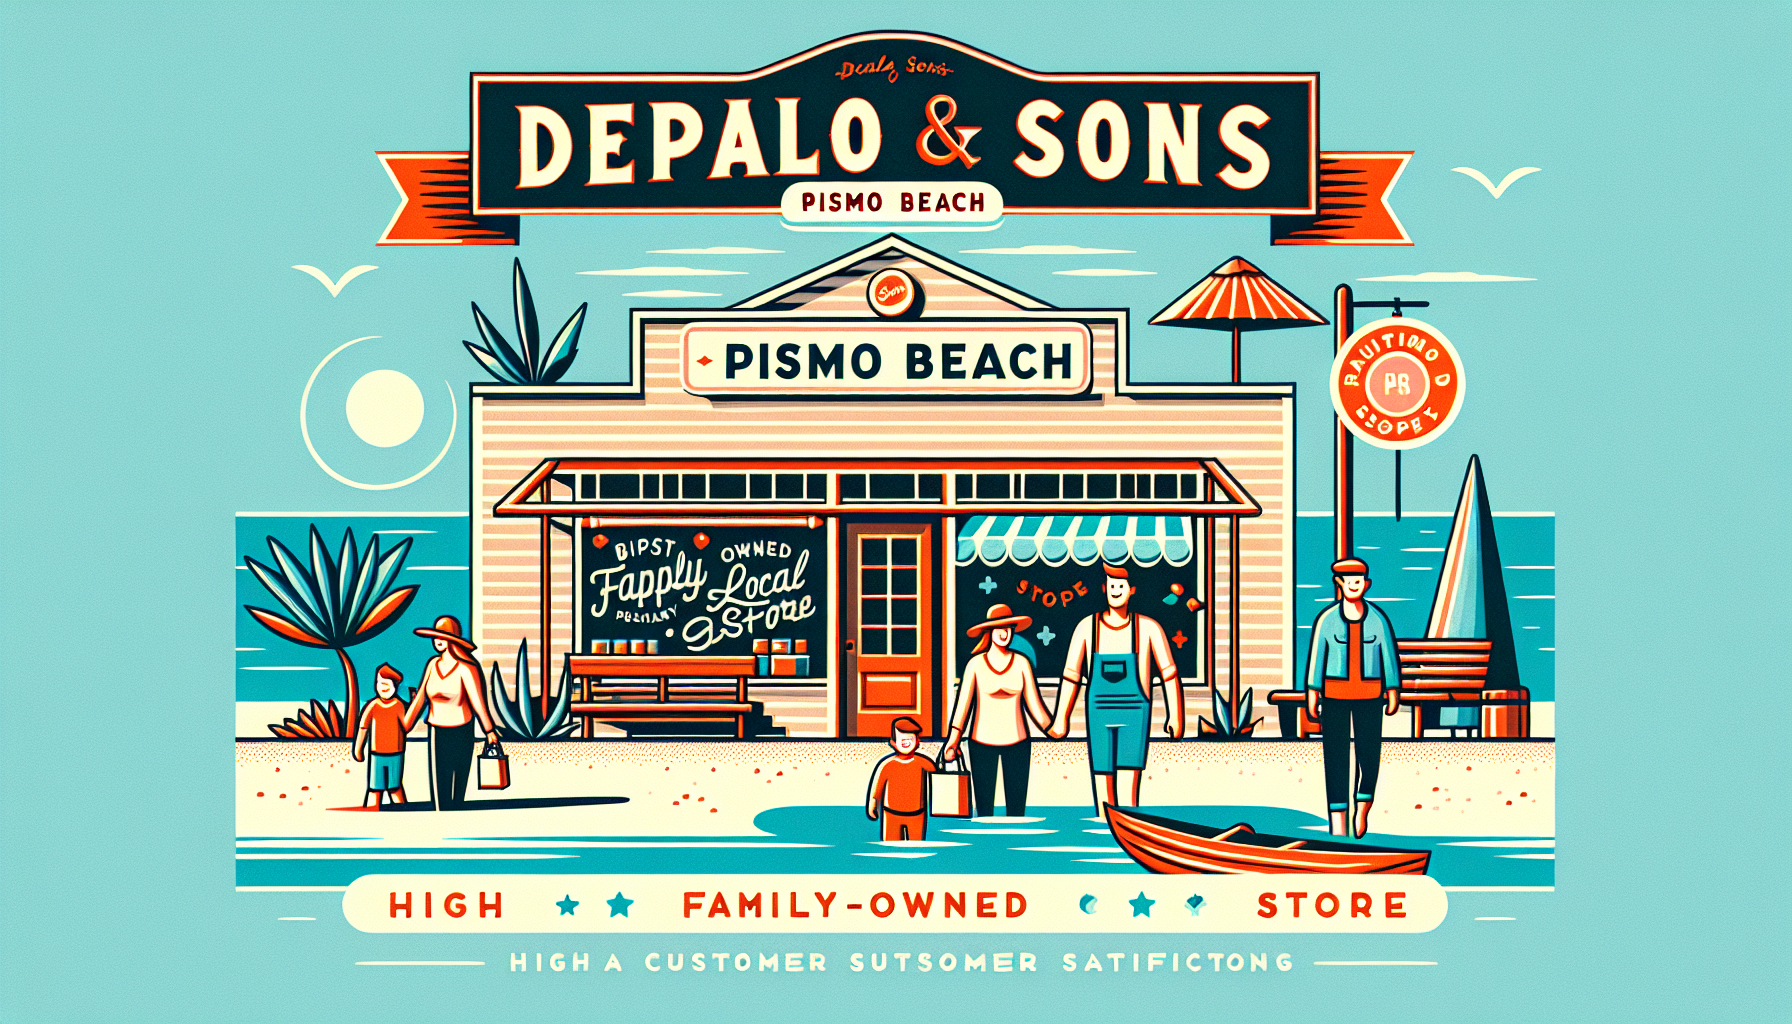 depalo & sons pismo beach reviews